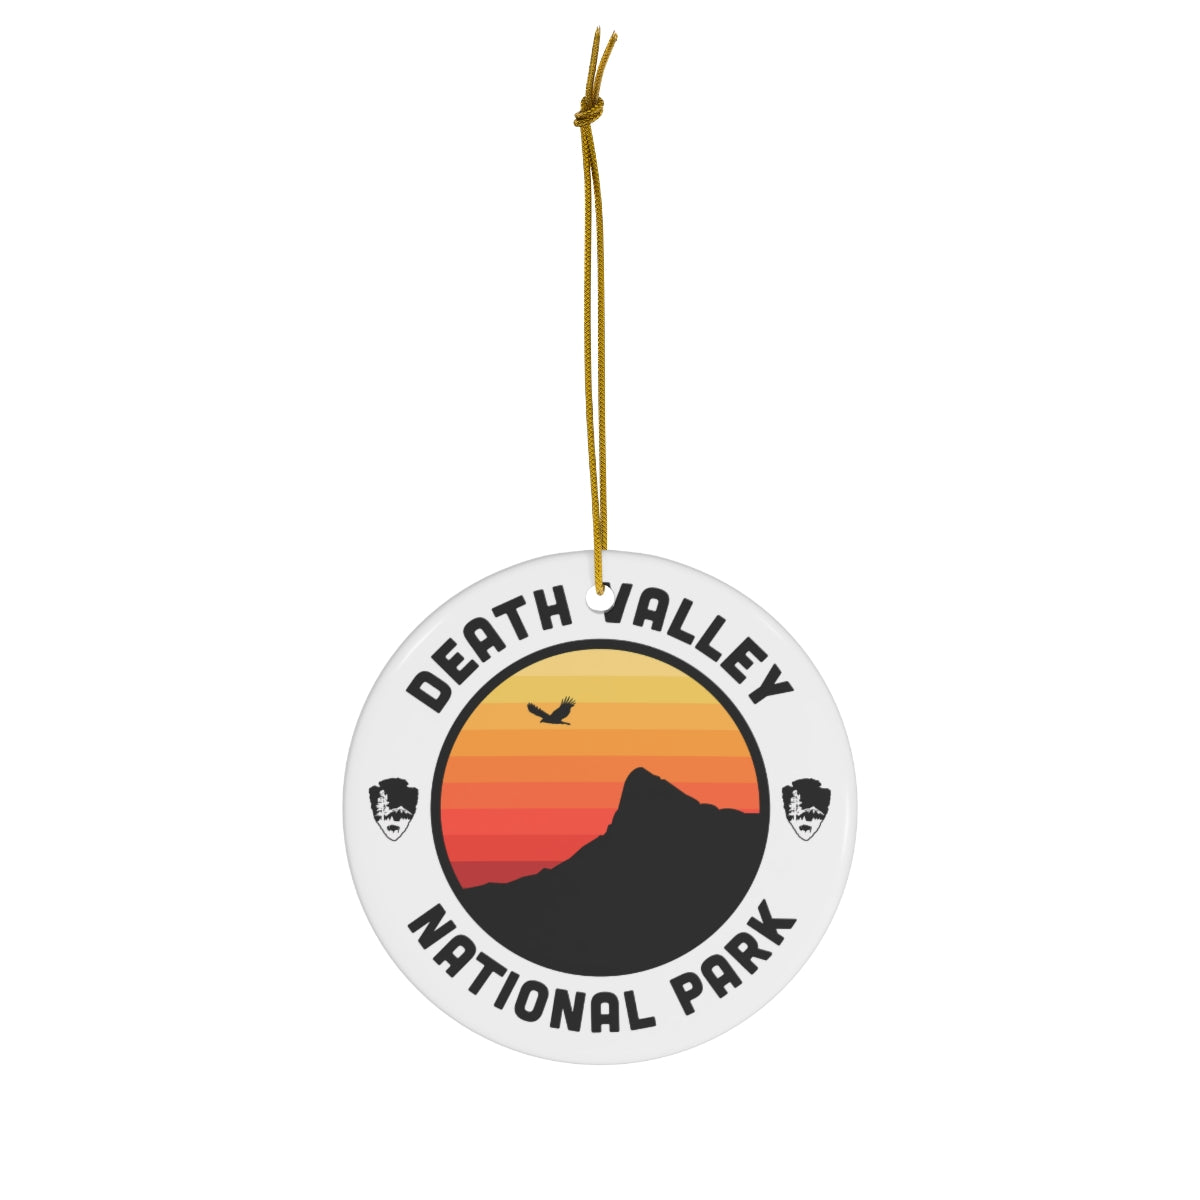 Death Valley National Park Ornament - Round Emblem Design